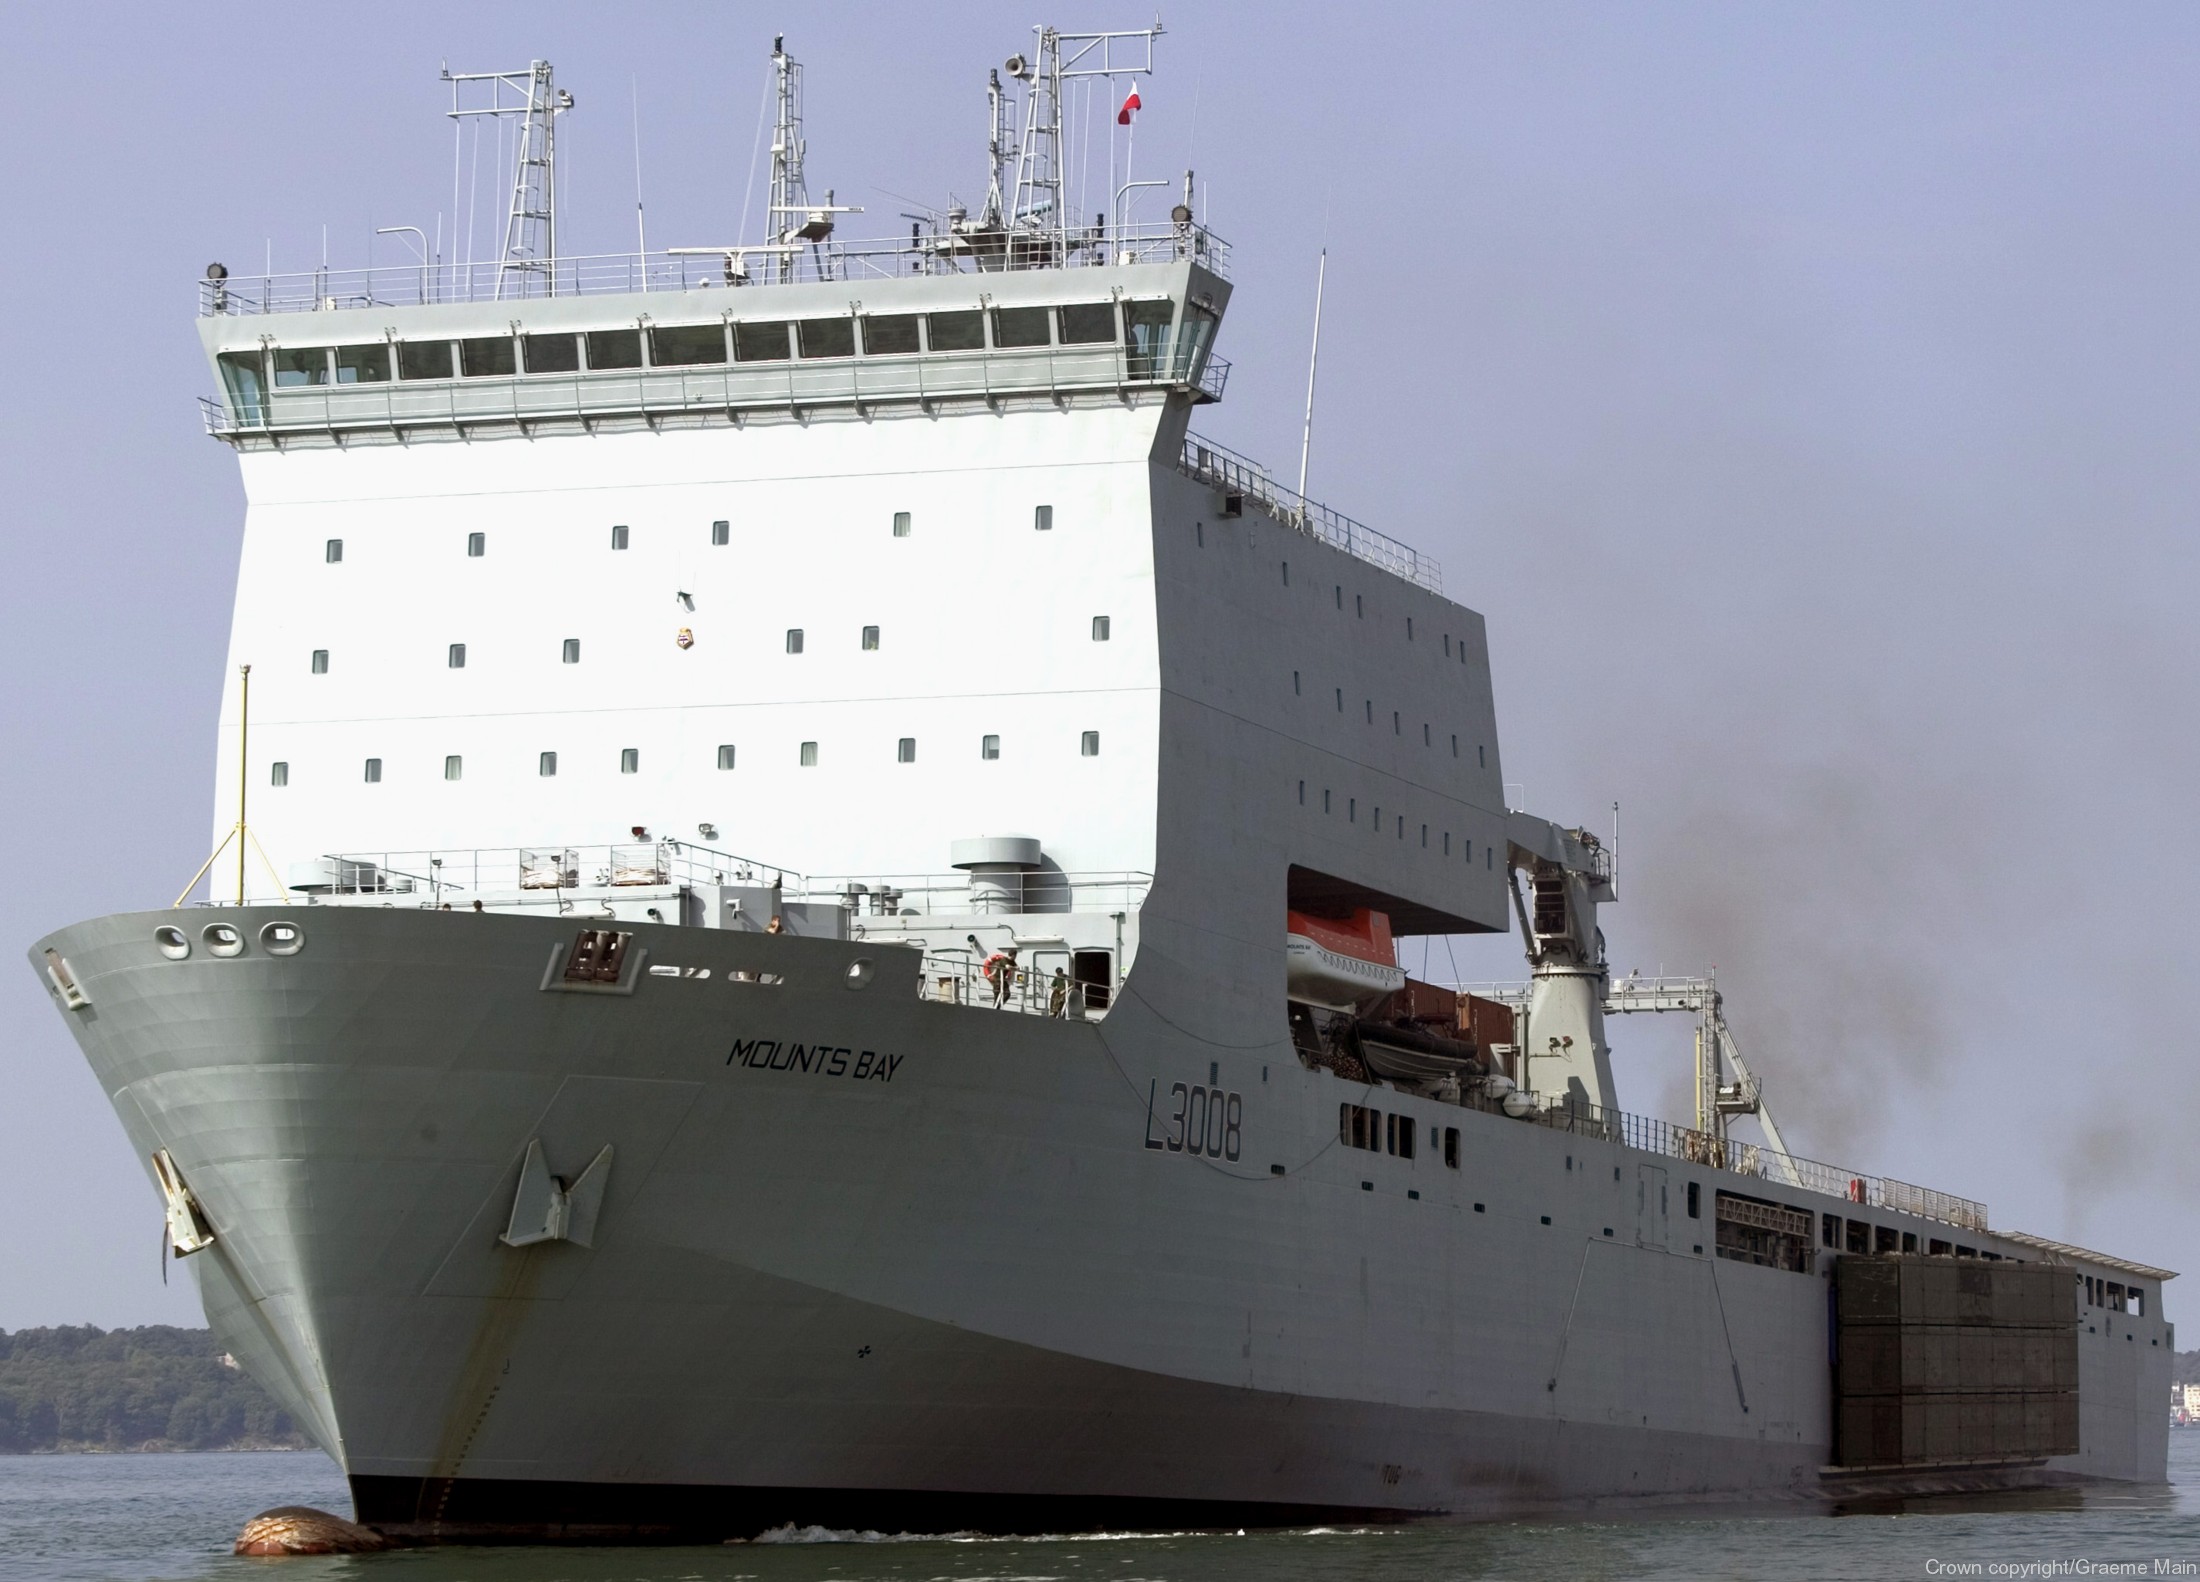 rfa mounts bay l-3008 class dock landing ship lsd amphibious royal fleet auxilary navy